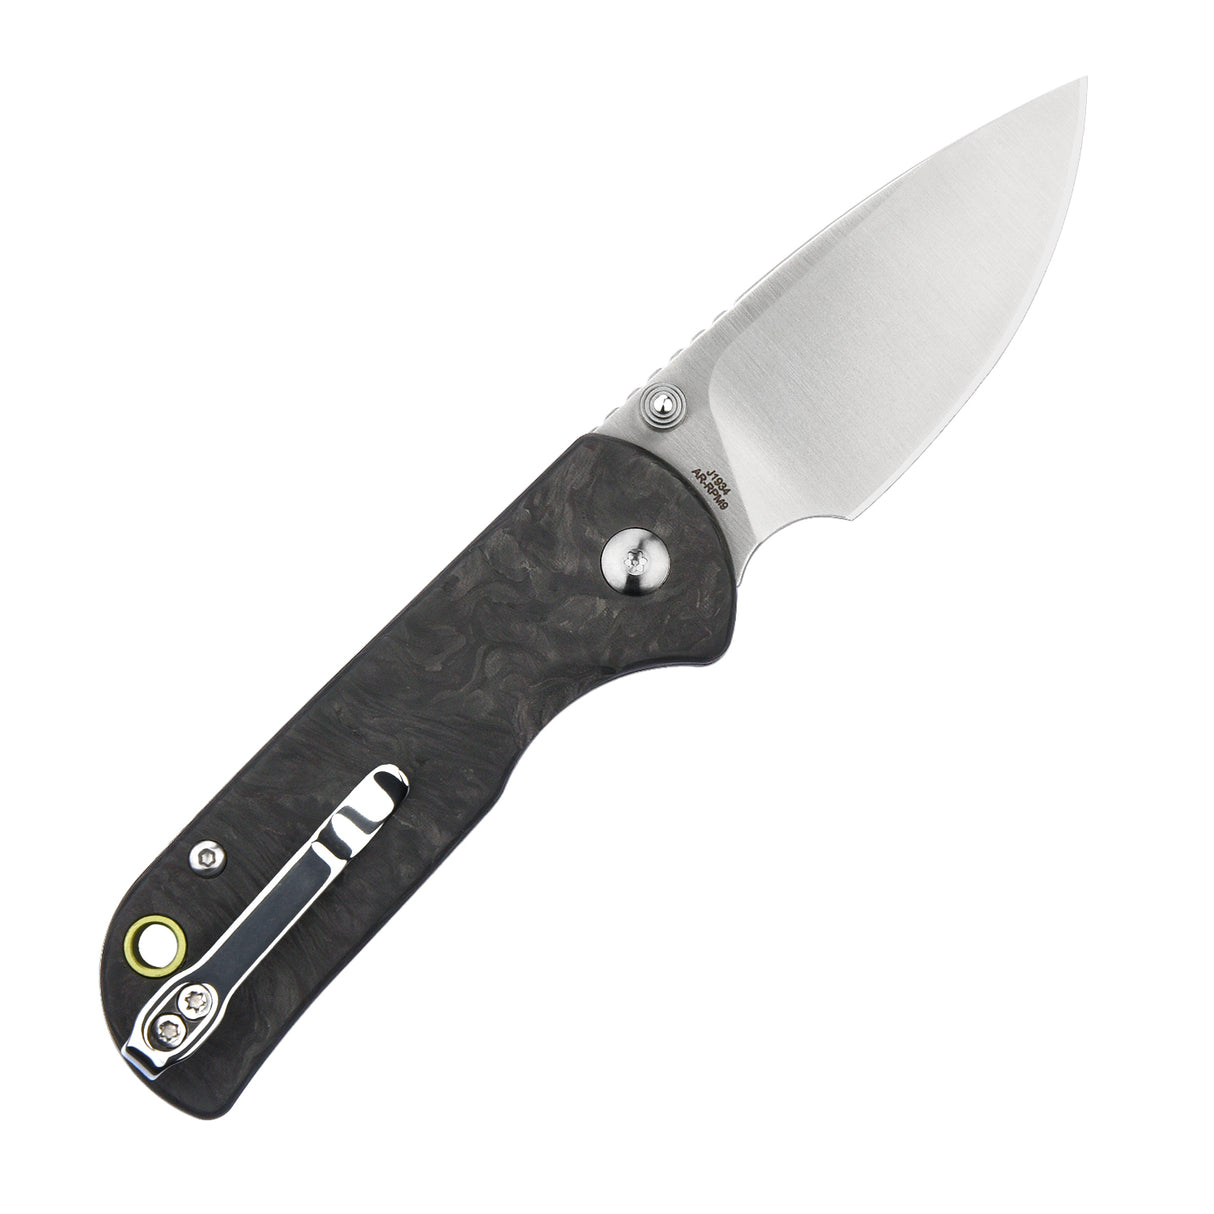 CJRB Mica J1934 AR-RPM9 Steel Blade Forged Carbon Handle Folding Knives